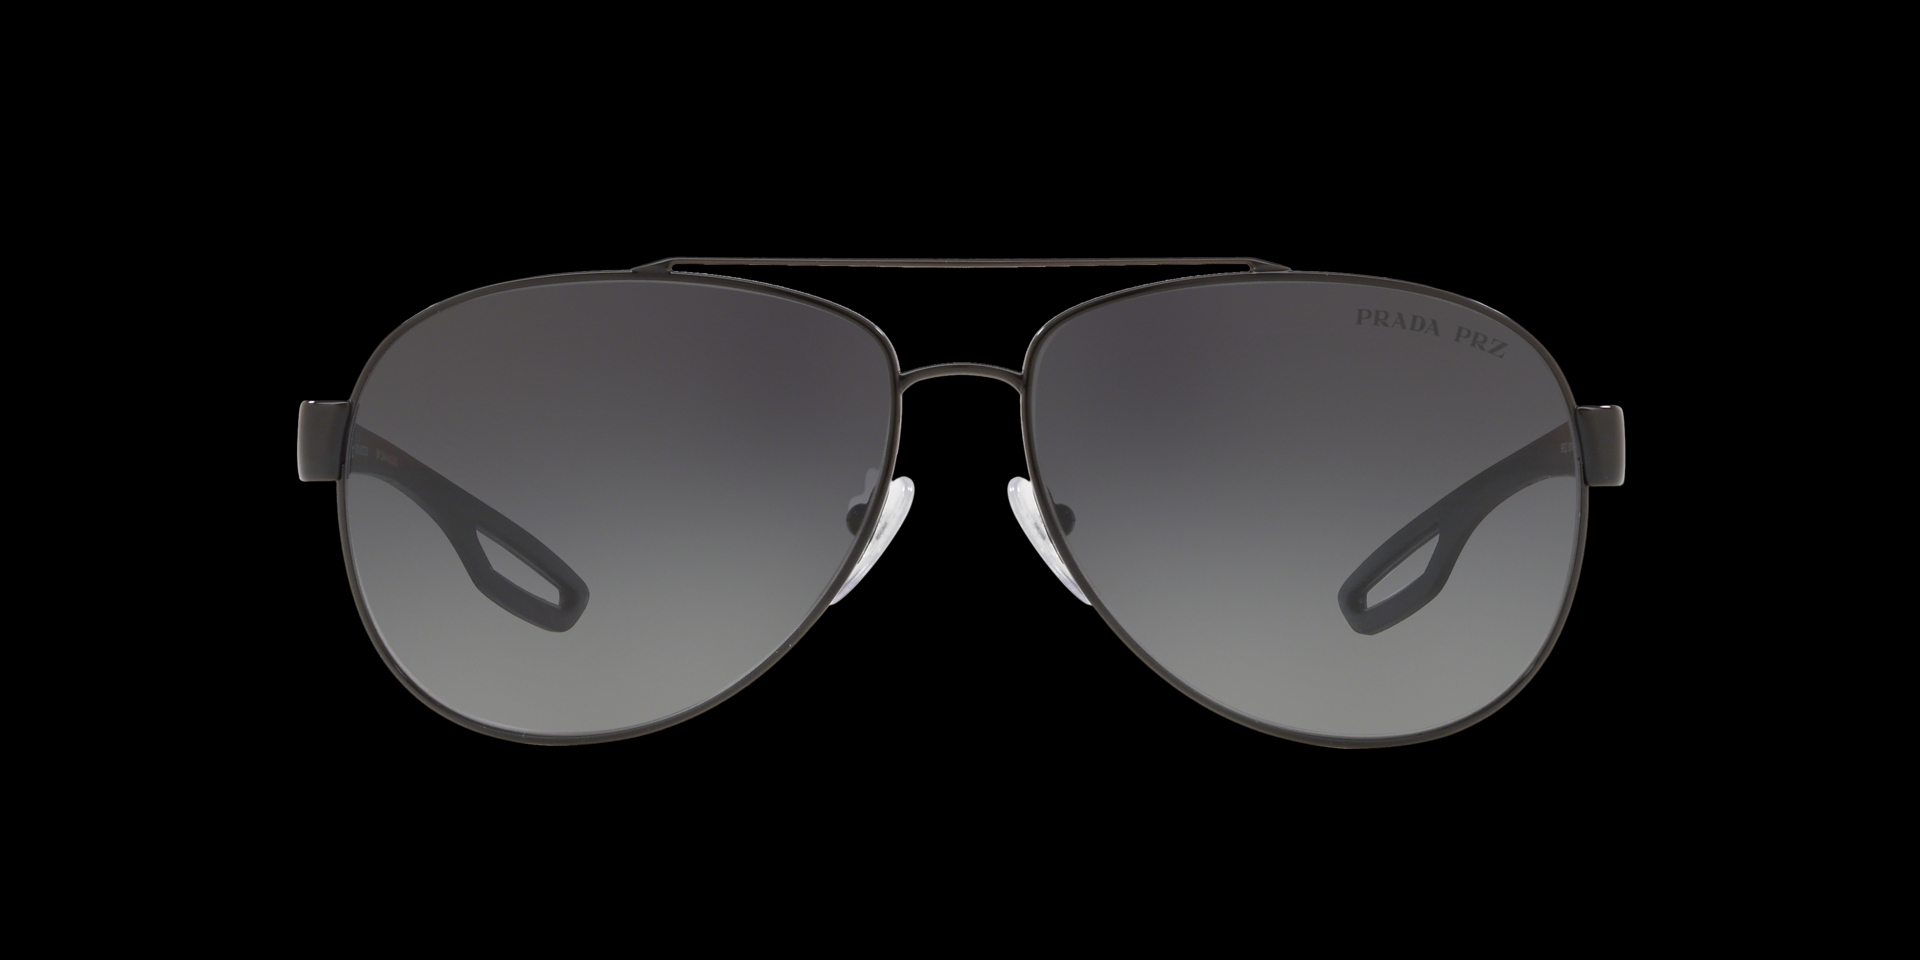 Buy Prada Linea Rossa sunglasses & glasses online - shipped worldwide